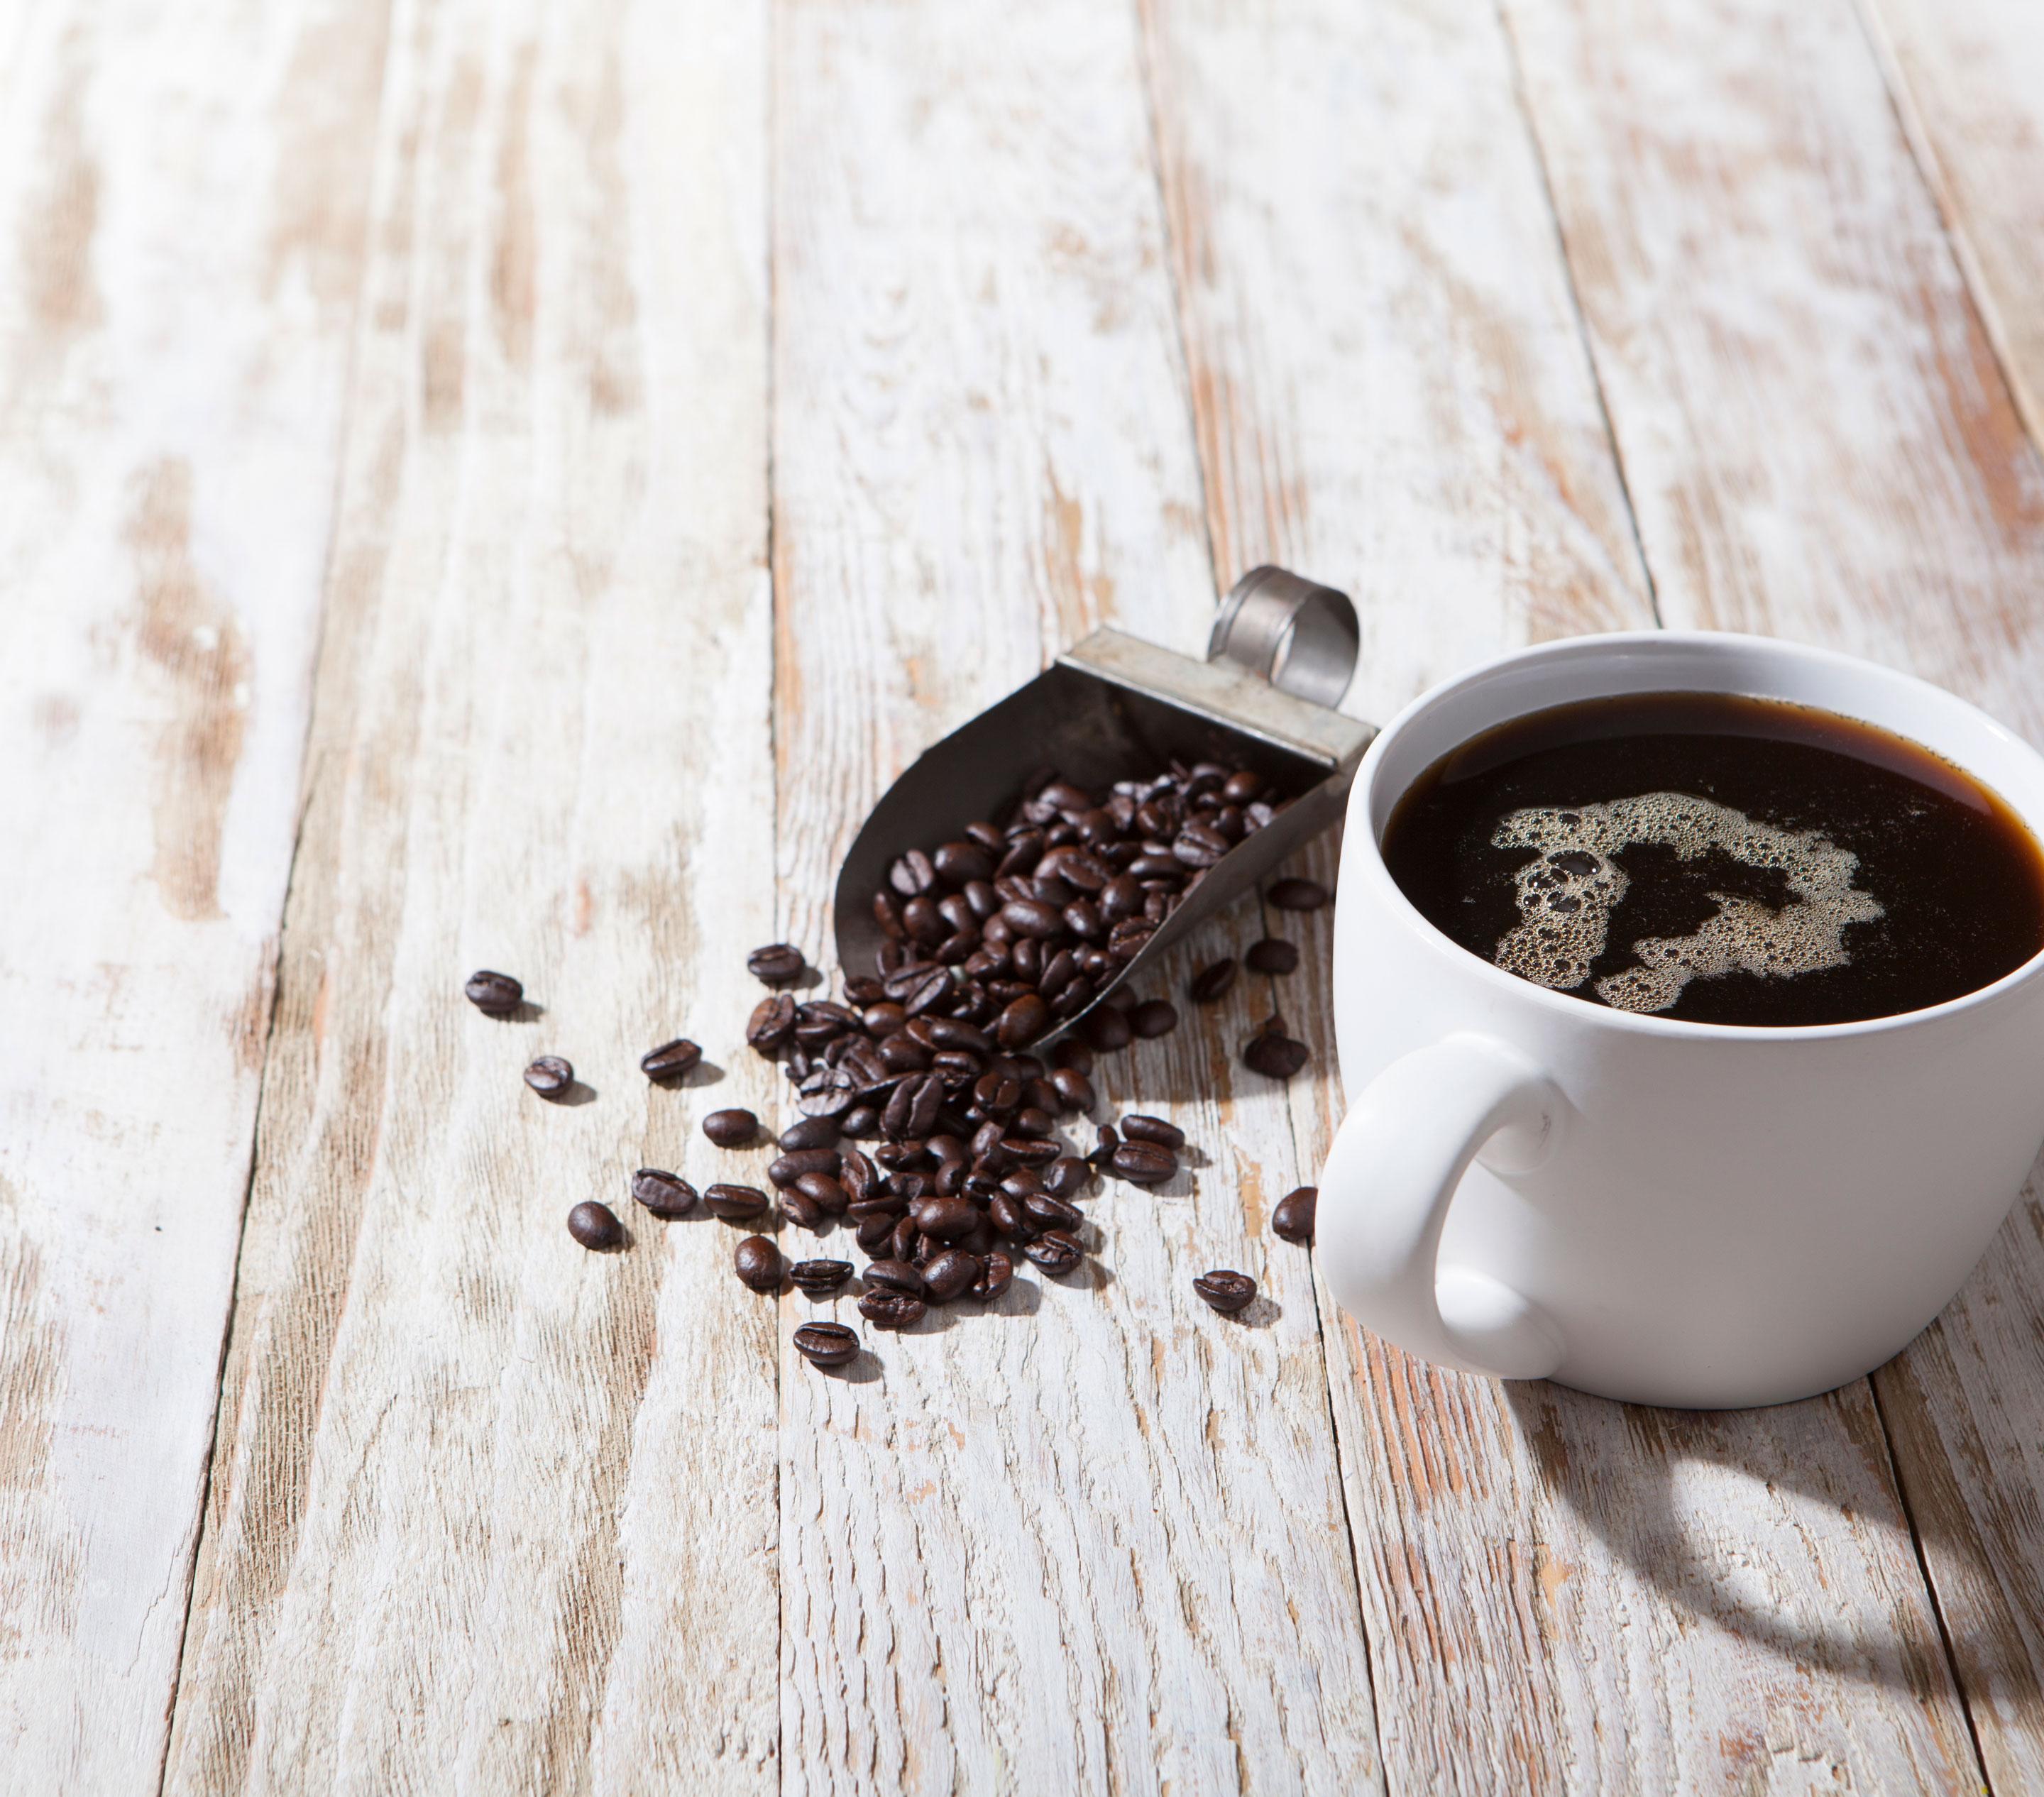 Brewed Coffee | The Coffee Bean & Tea Leaf